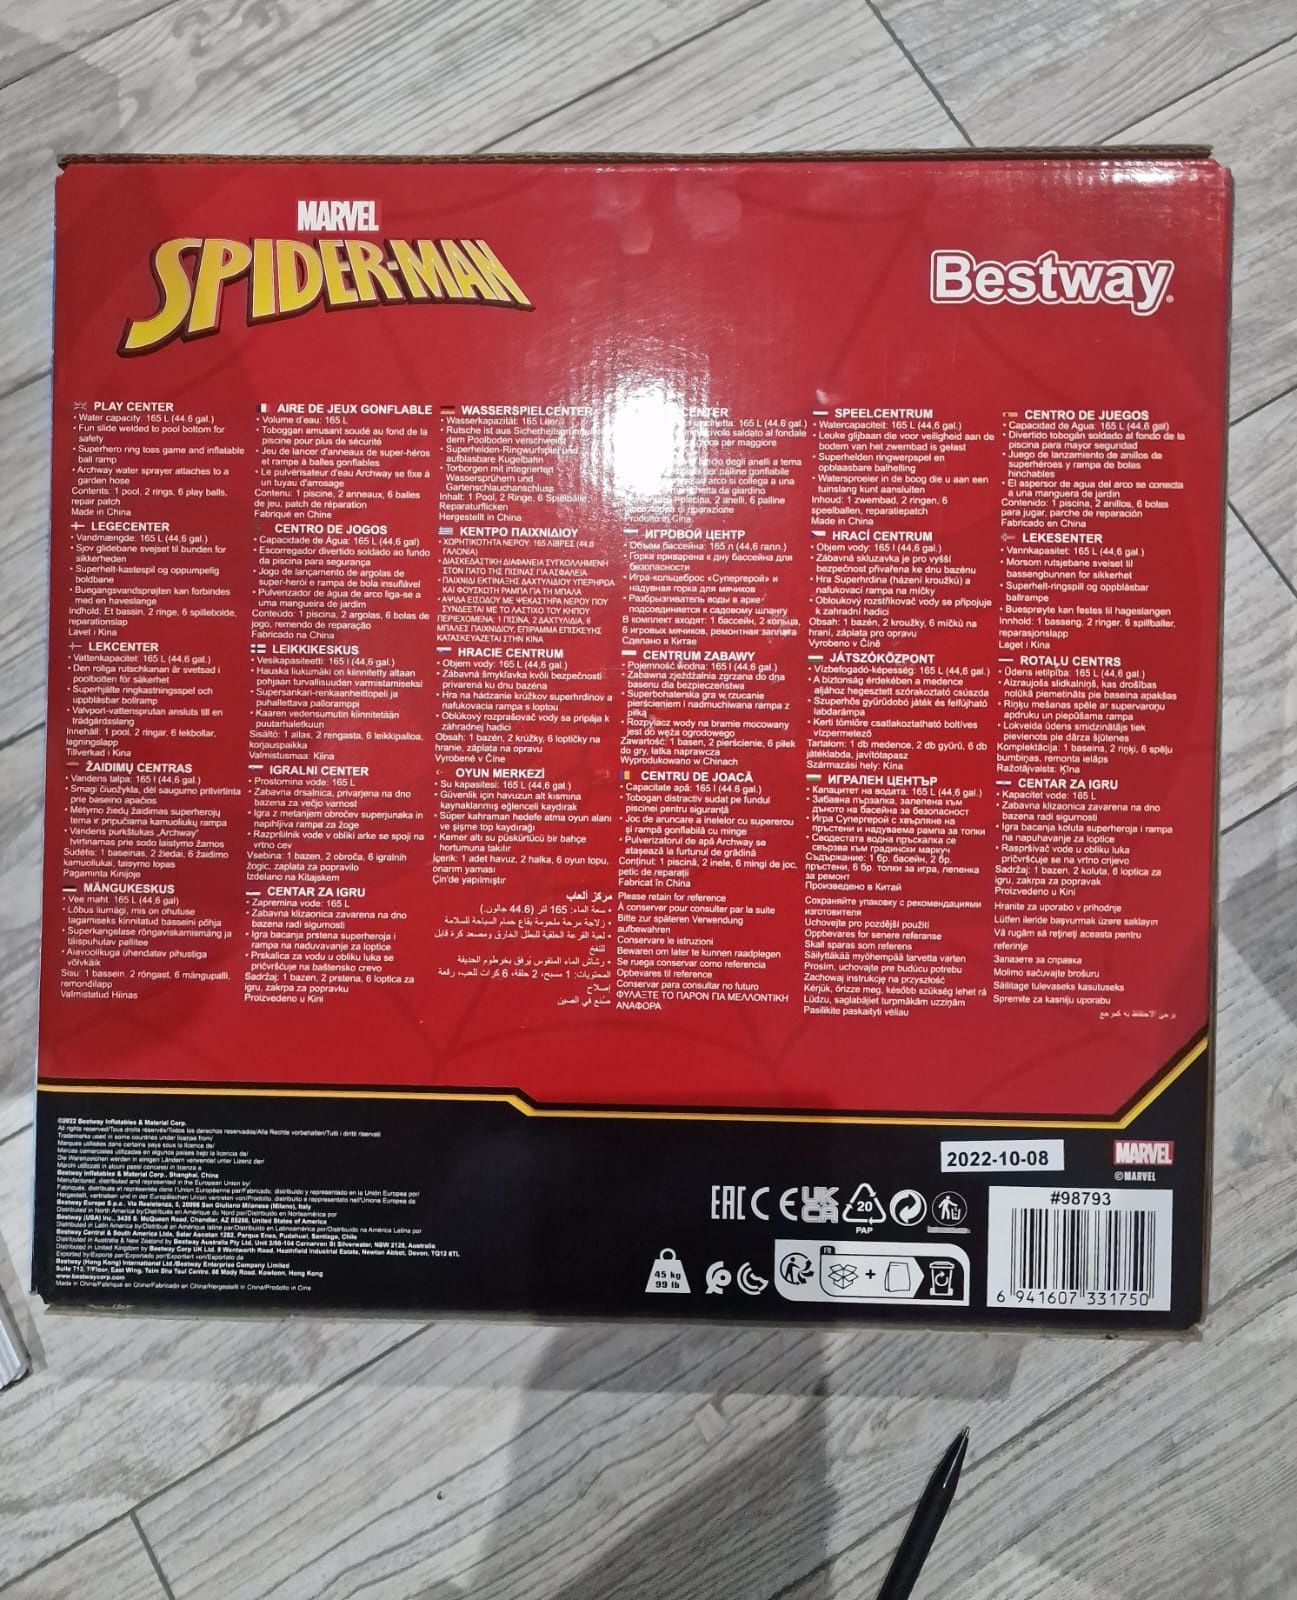 Bestway Dmuchany Plac Zabaw Spider Man 211 X 206 X 127cm 98793 (14714)